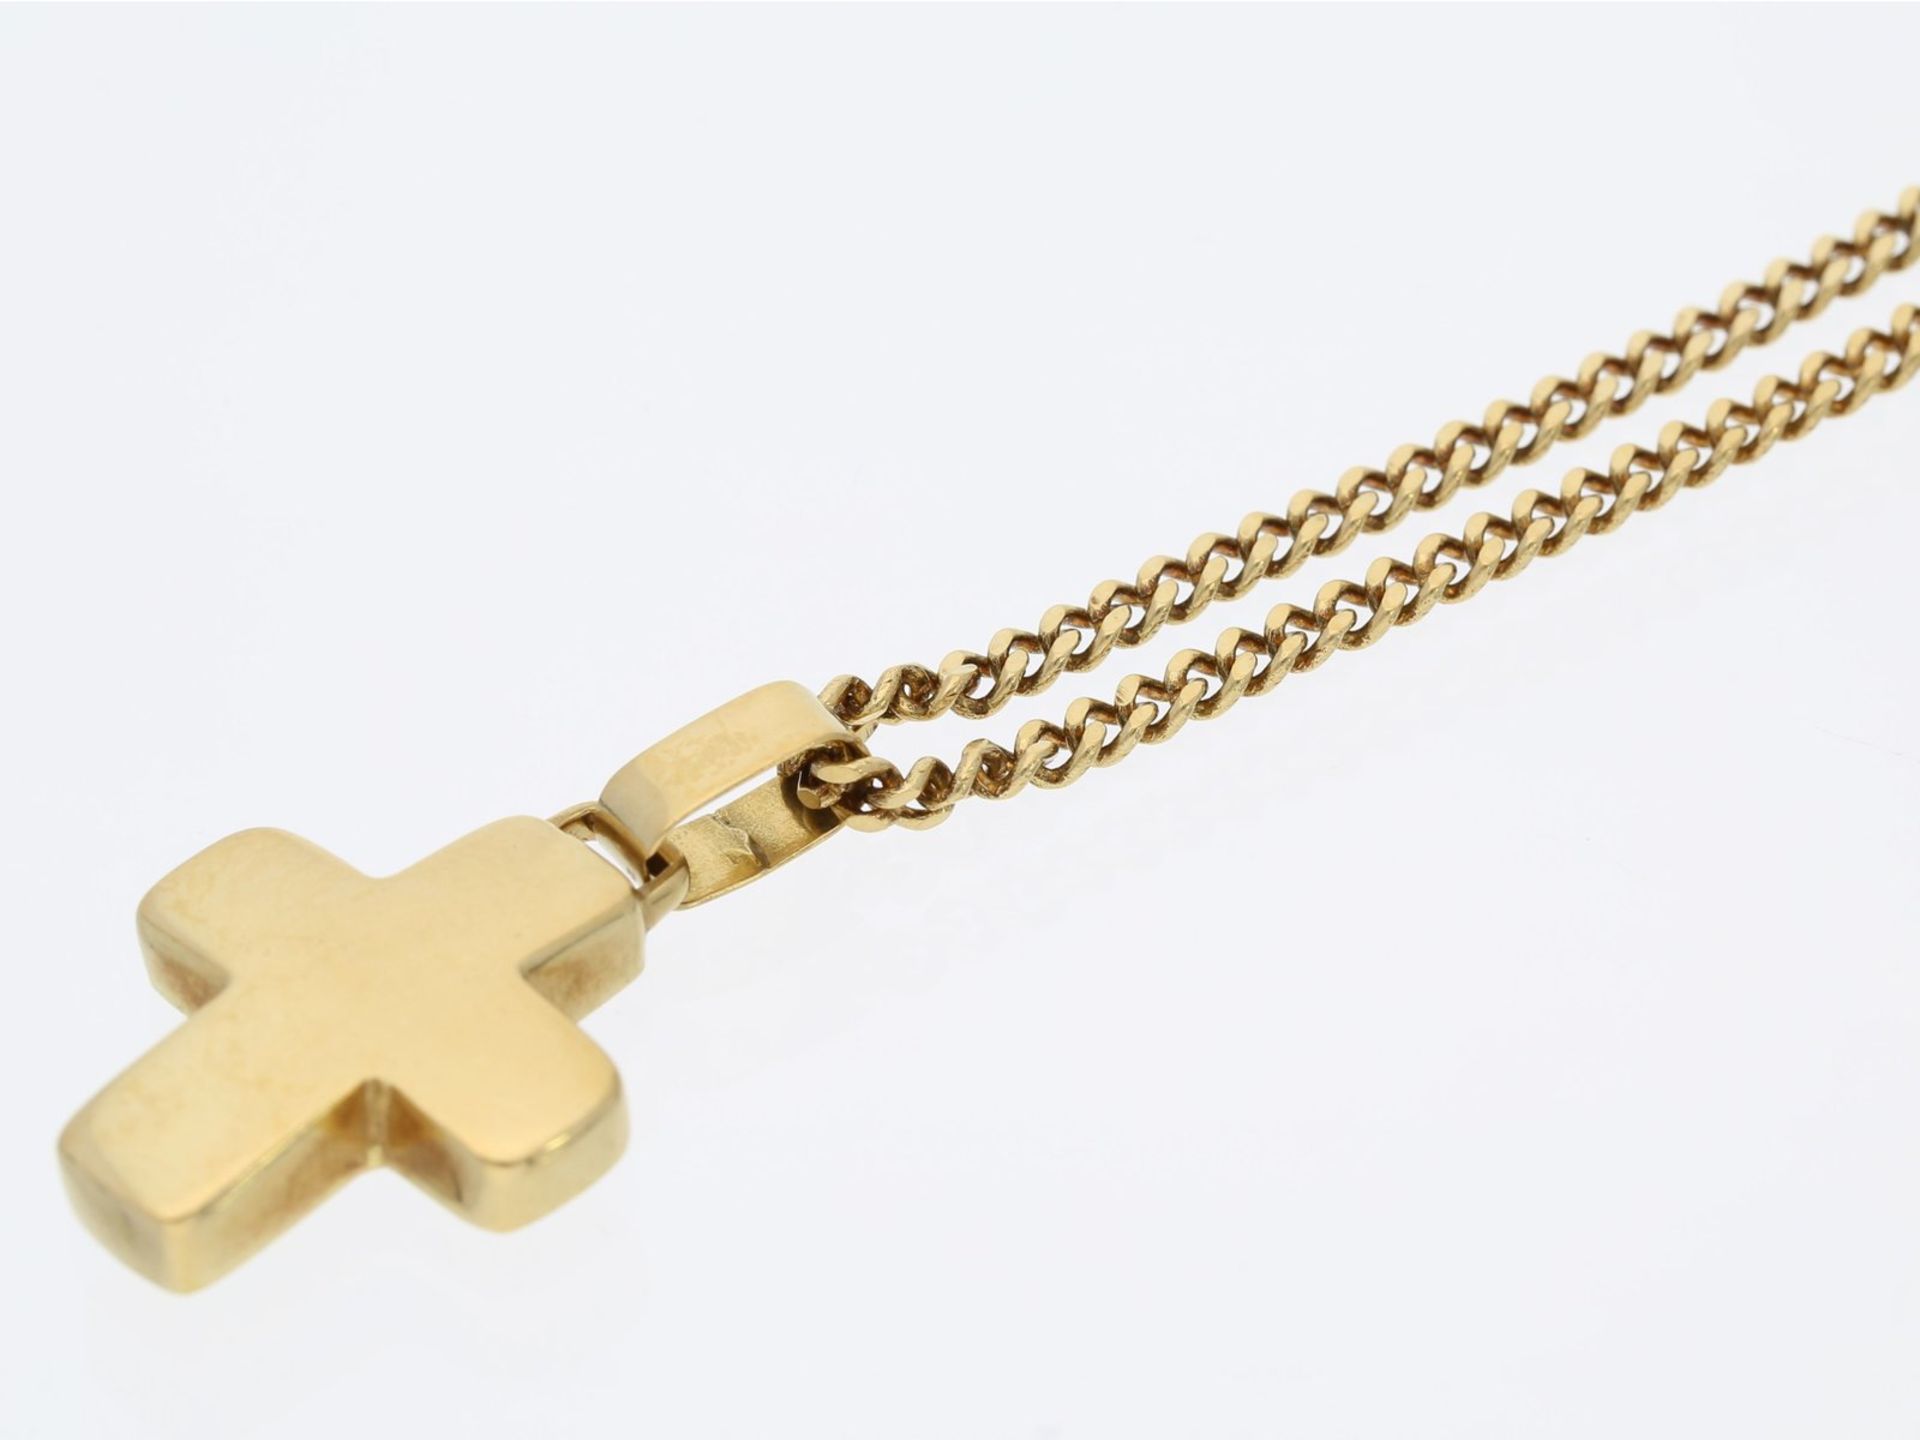 Kette/Collier/Anhänger: solide Collierkette mit Kreuzanhänger, 18K GoldCa. 51,5cm lang, ca. 17g, 18K